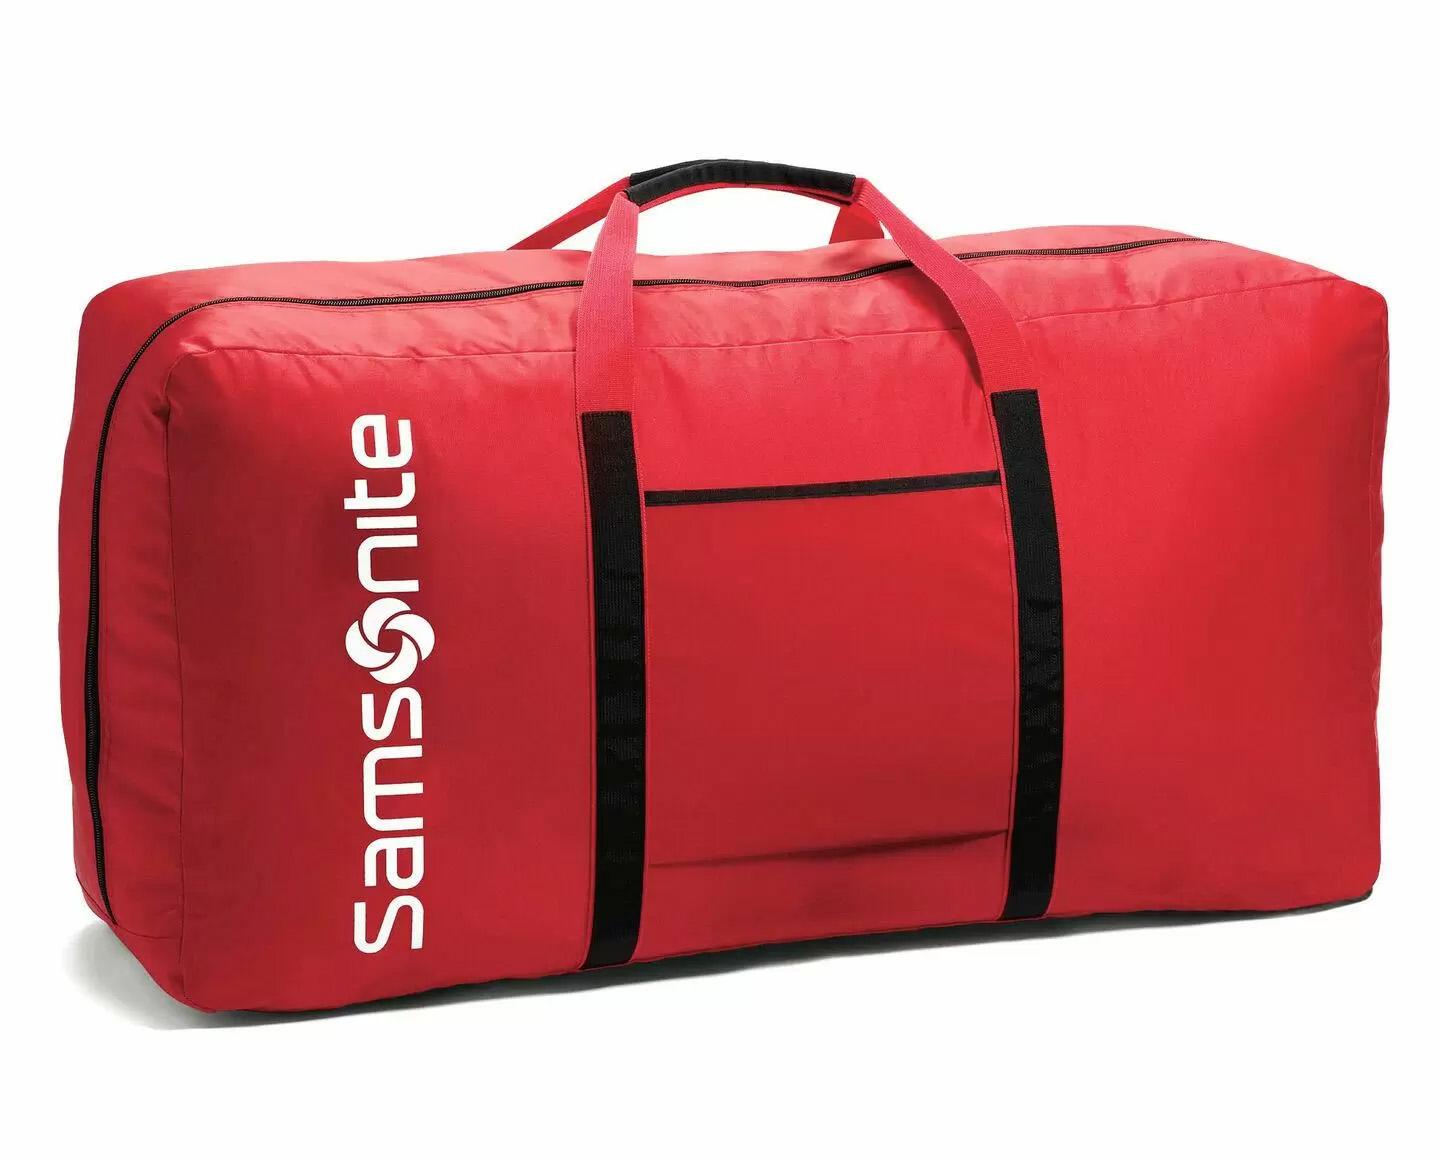 Samsonite Tote-A-Ton 33in Duffle Bag for $14.56 Shipped